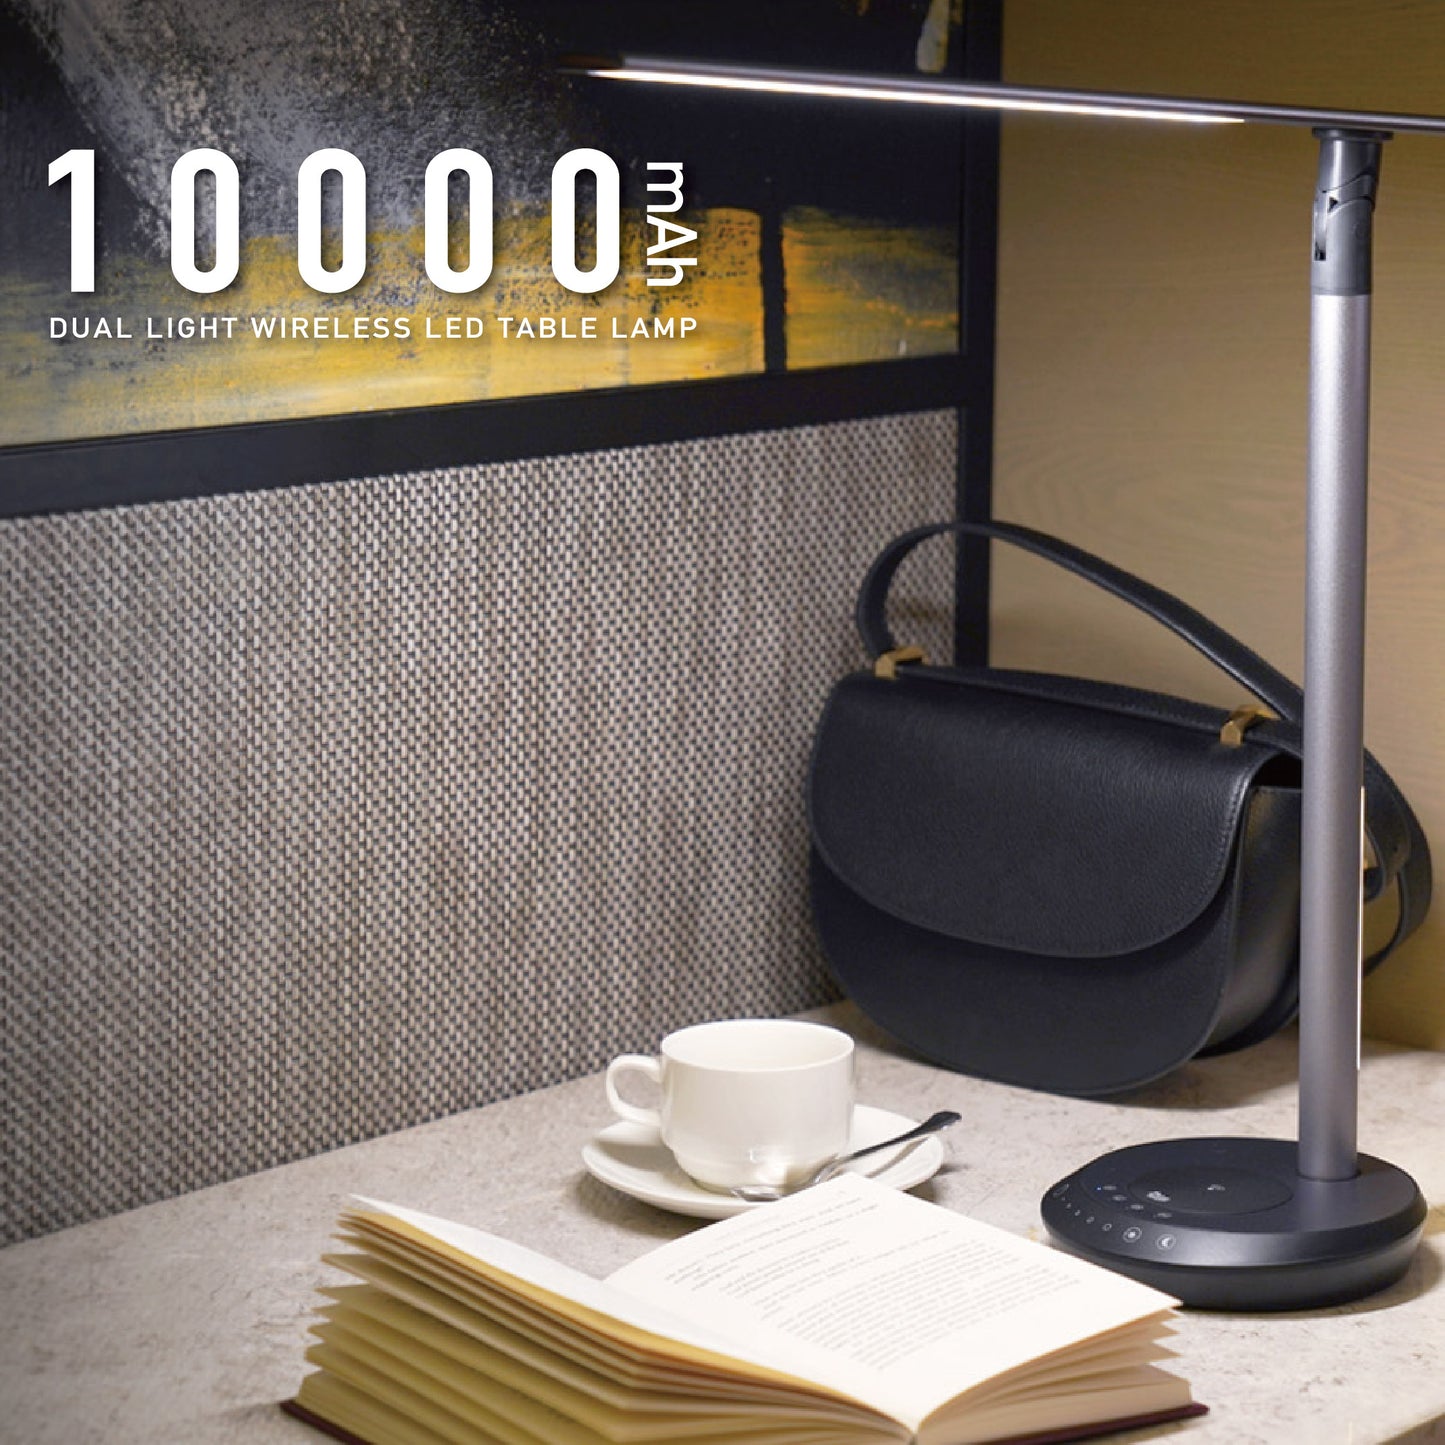 (Top Selling) 10,000mAh Dual Light Wireless LED Table Lamp [Gift - Magic Sensor Light]